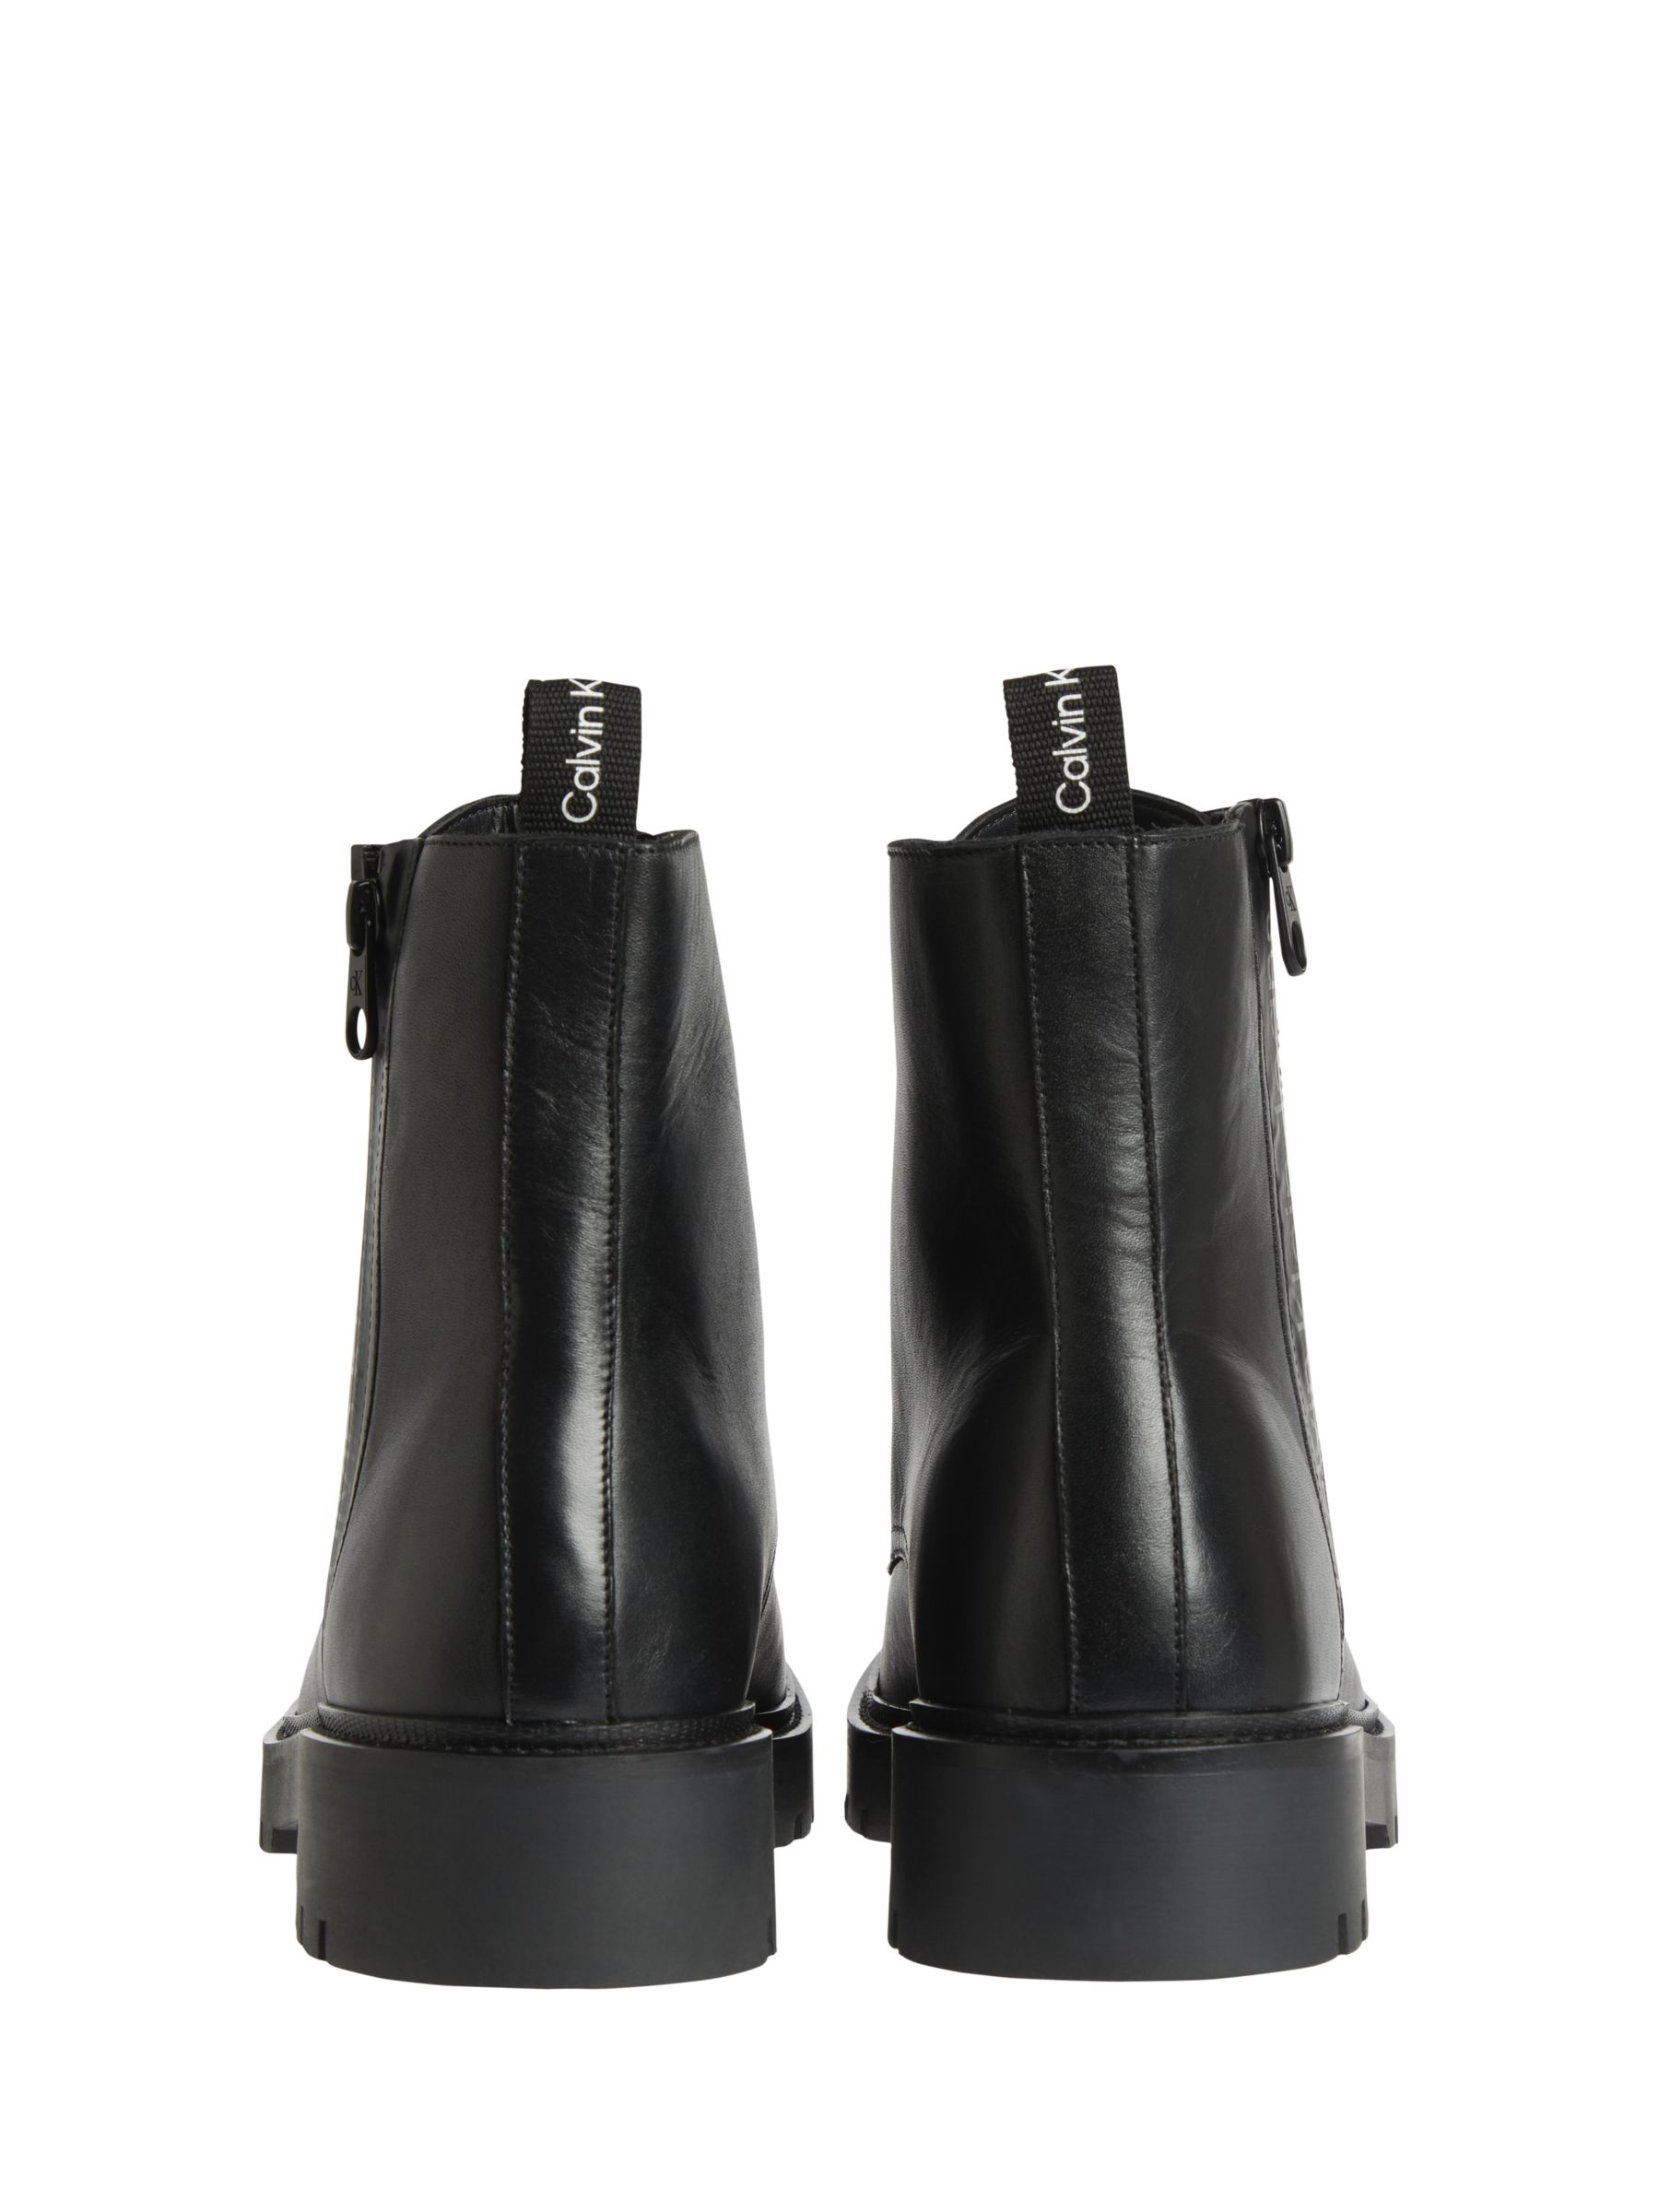 Calvin Klein Leather Lace Up Combat Boots, Black, 6